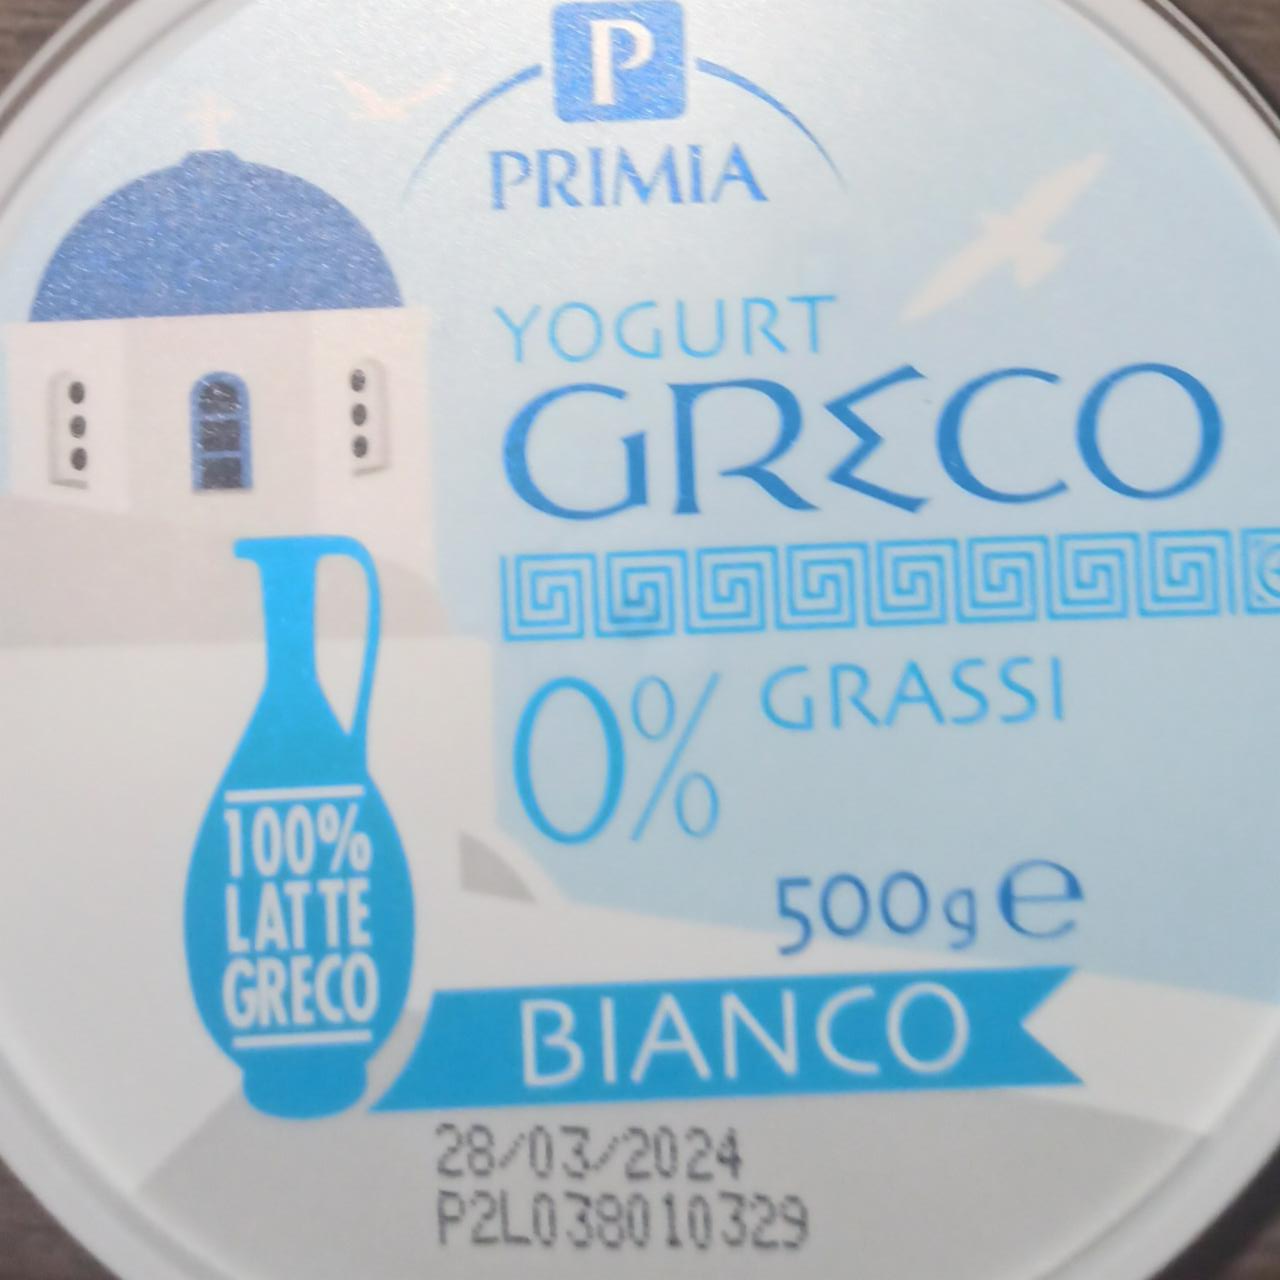 Zdjęcia - Yogurt Greco 0% Grassi Bianco Primia